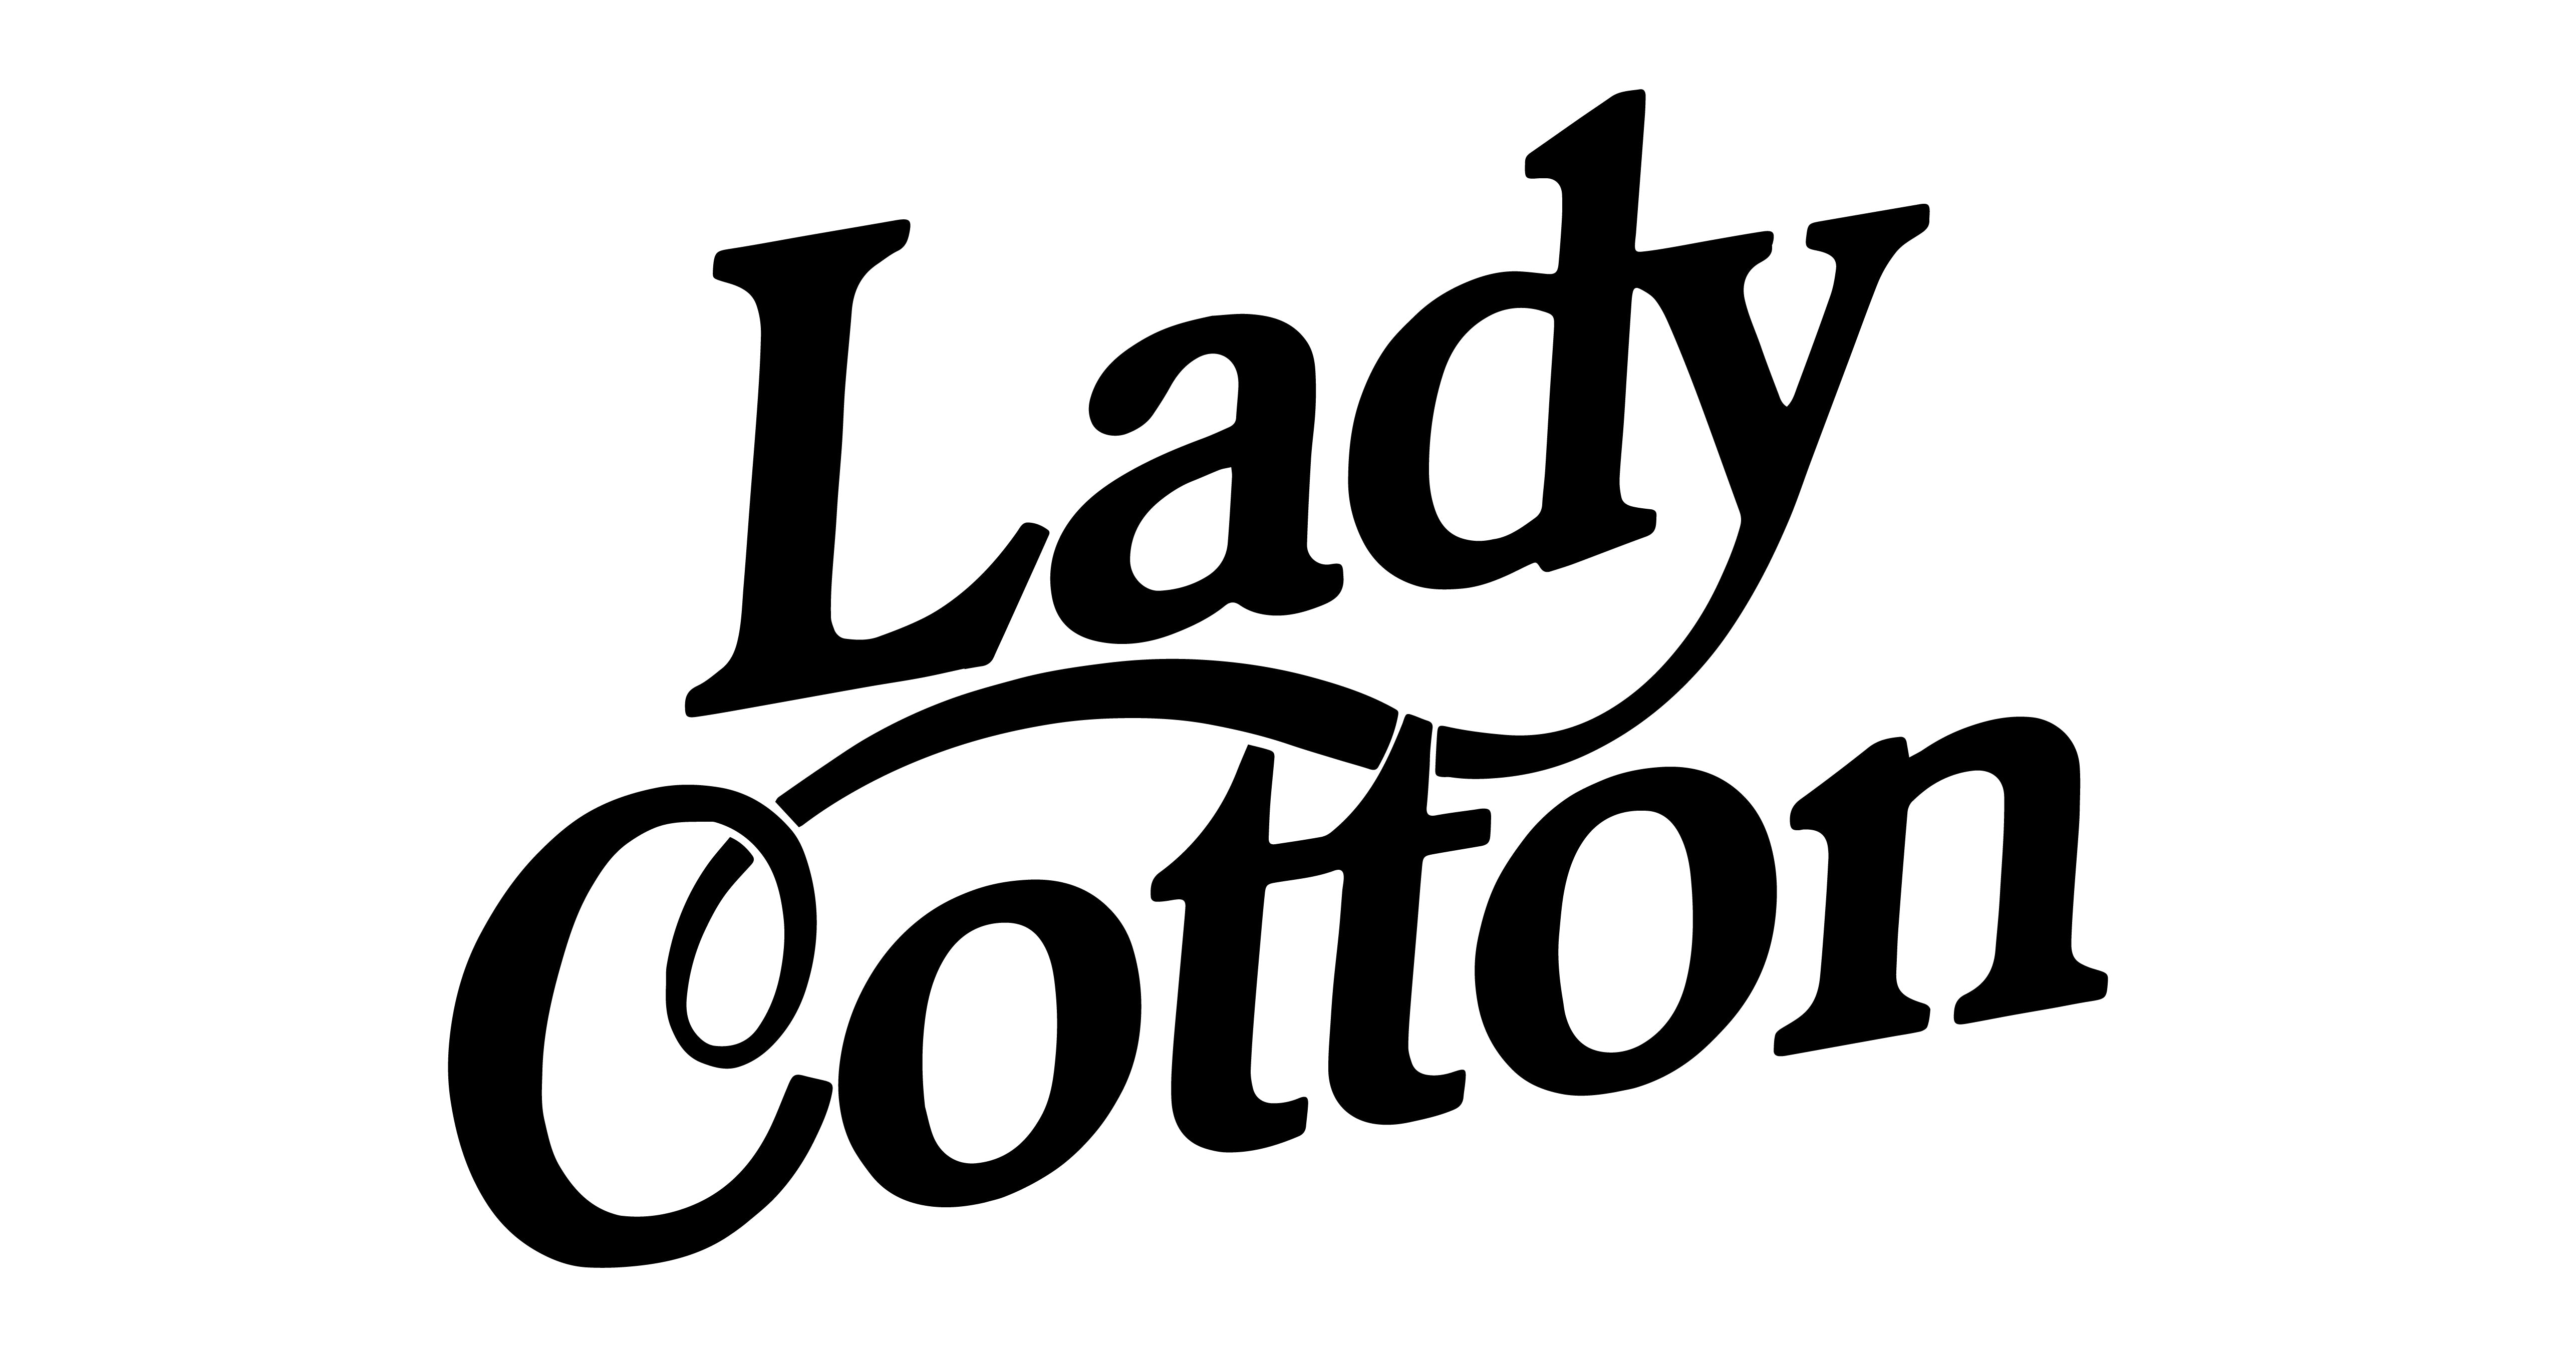 Ladycotton